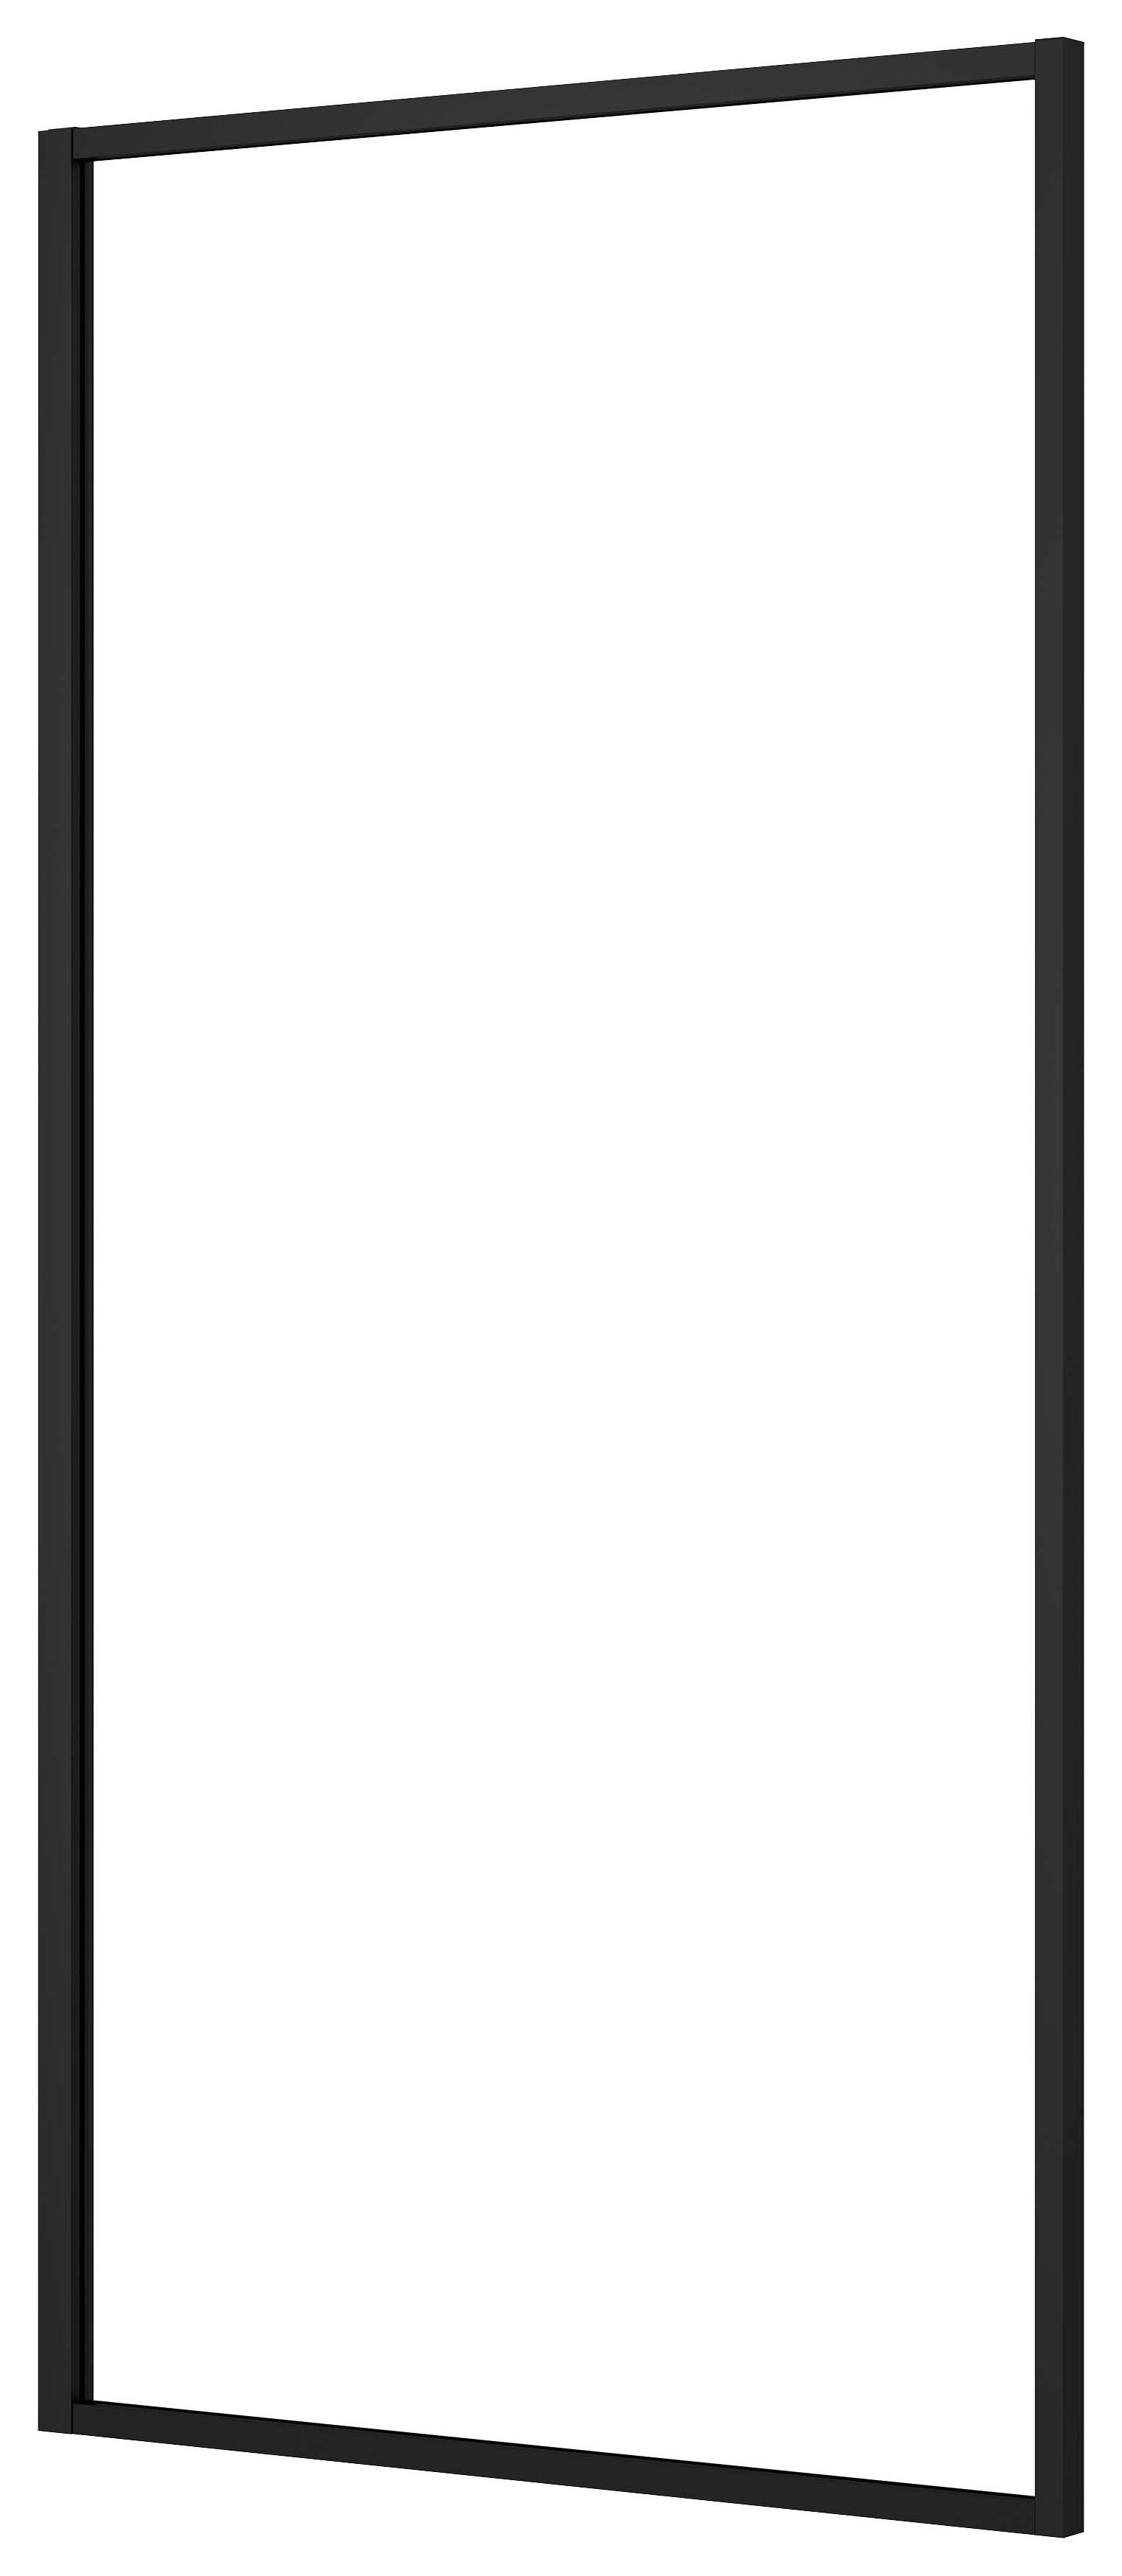 Nexa By Merlyn 8mm Black Framed Fixed Square Panel Bath Screen - 1500 x 800mm